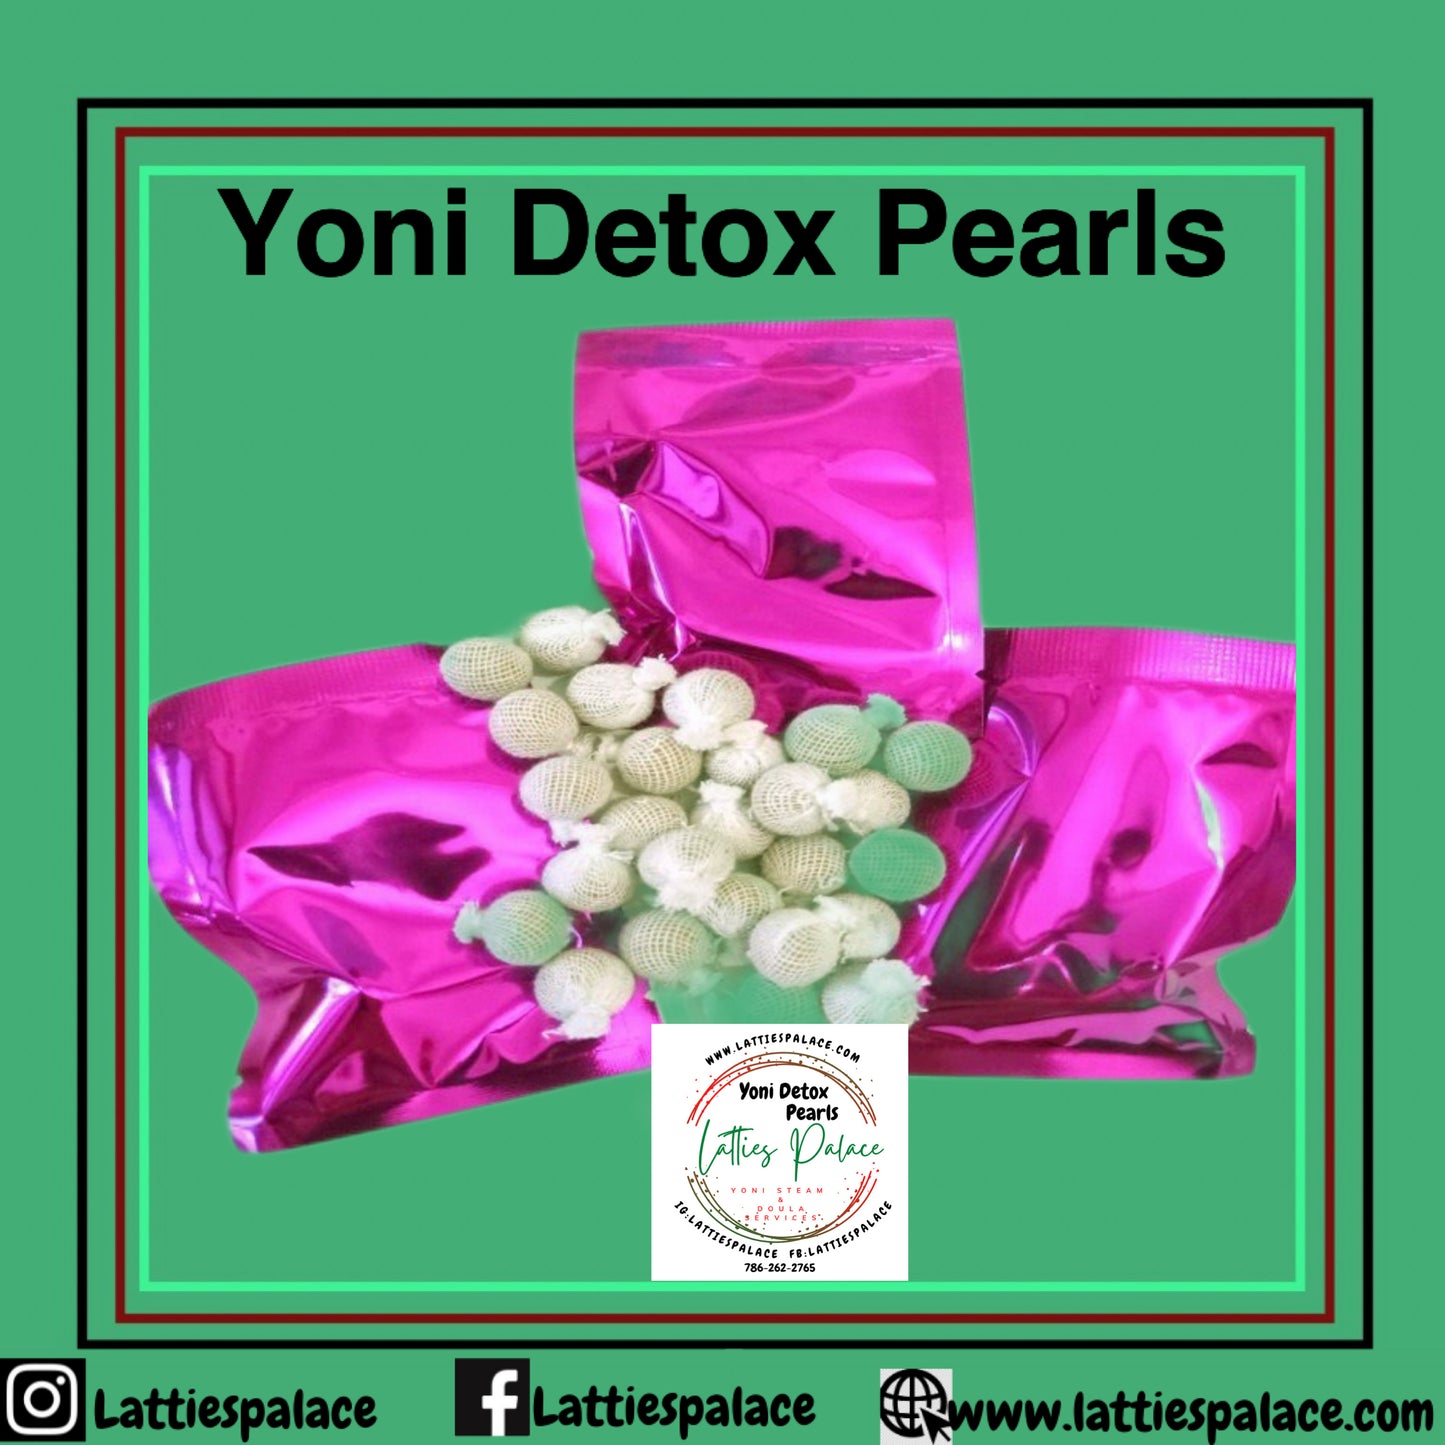 Vaginal/Yoni Detox Pearls